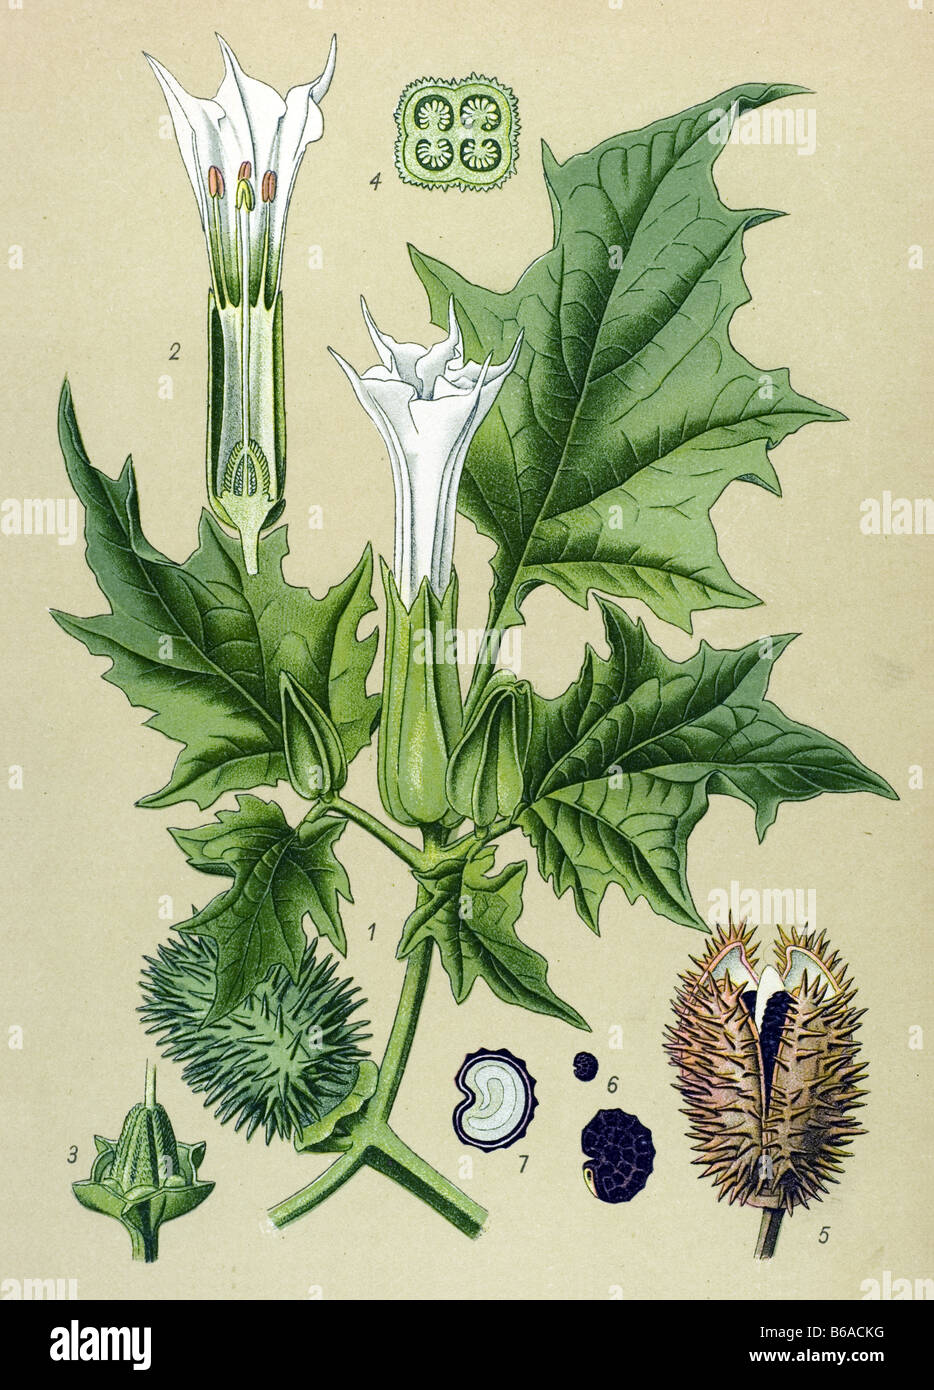 Thorn apple, Datura Stramonium poisonous plants illustrations Stock Photo